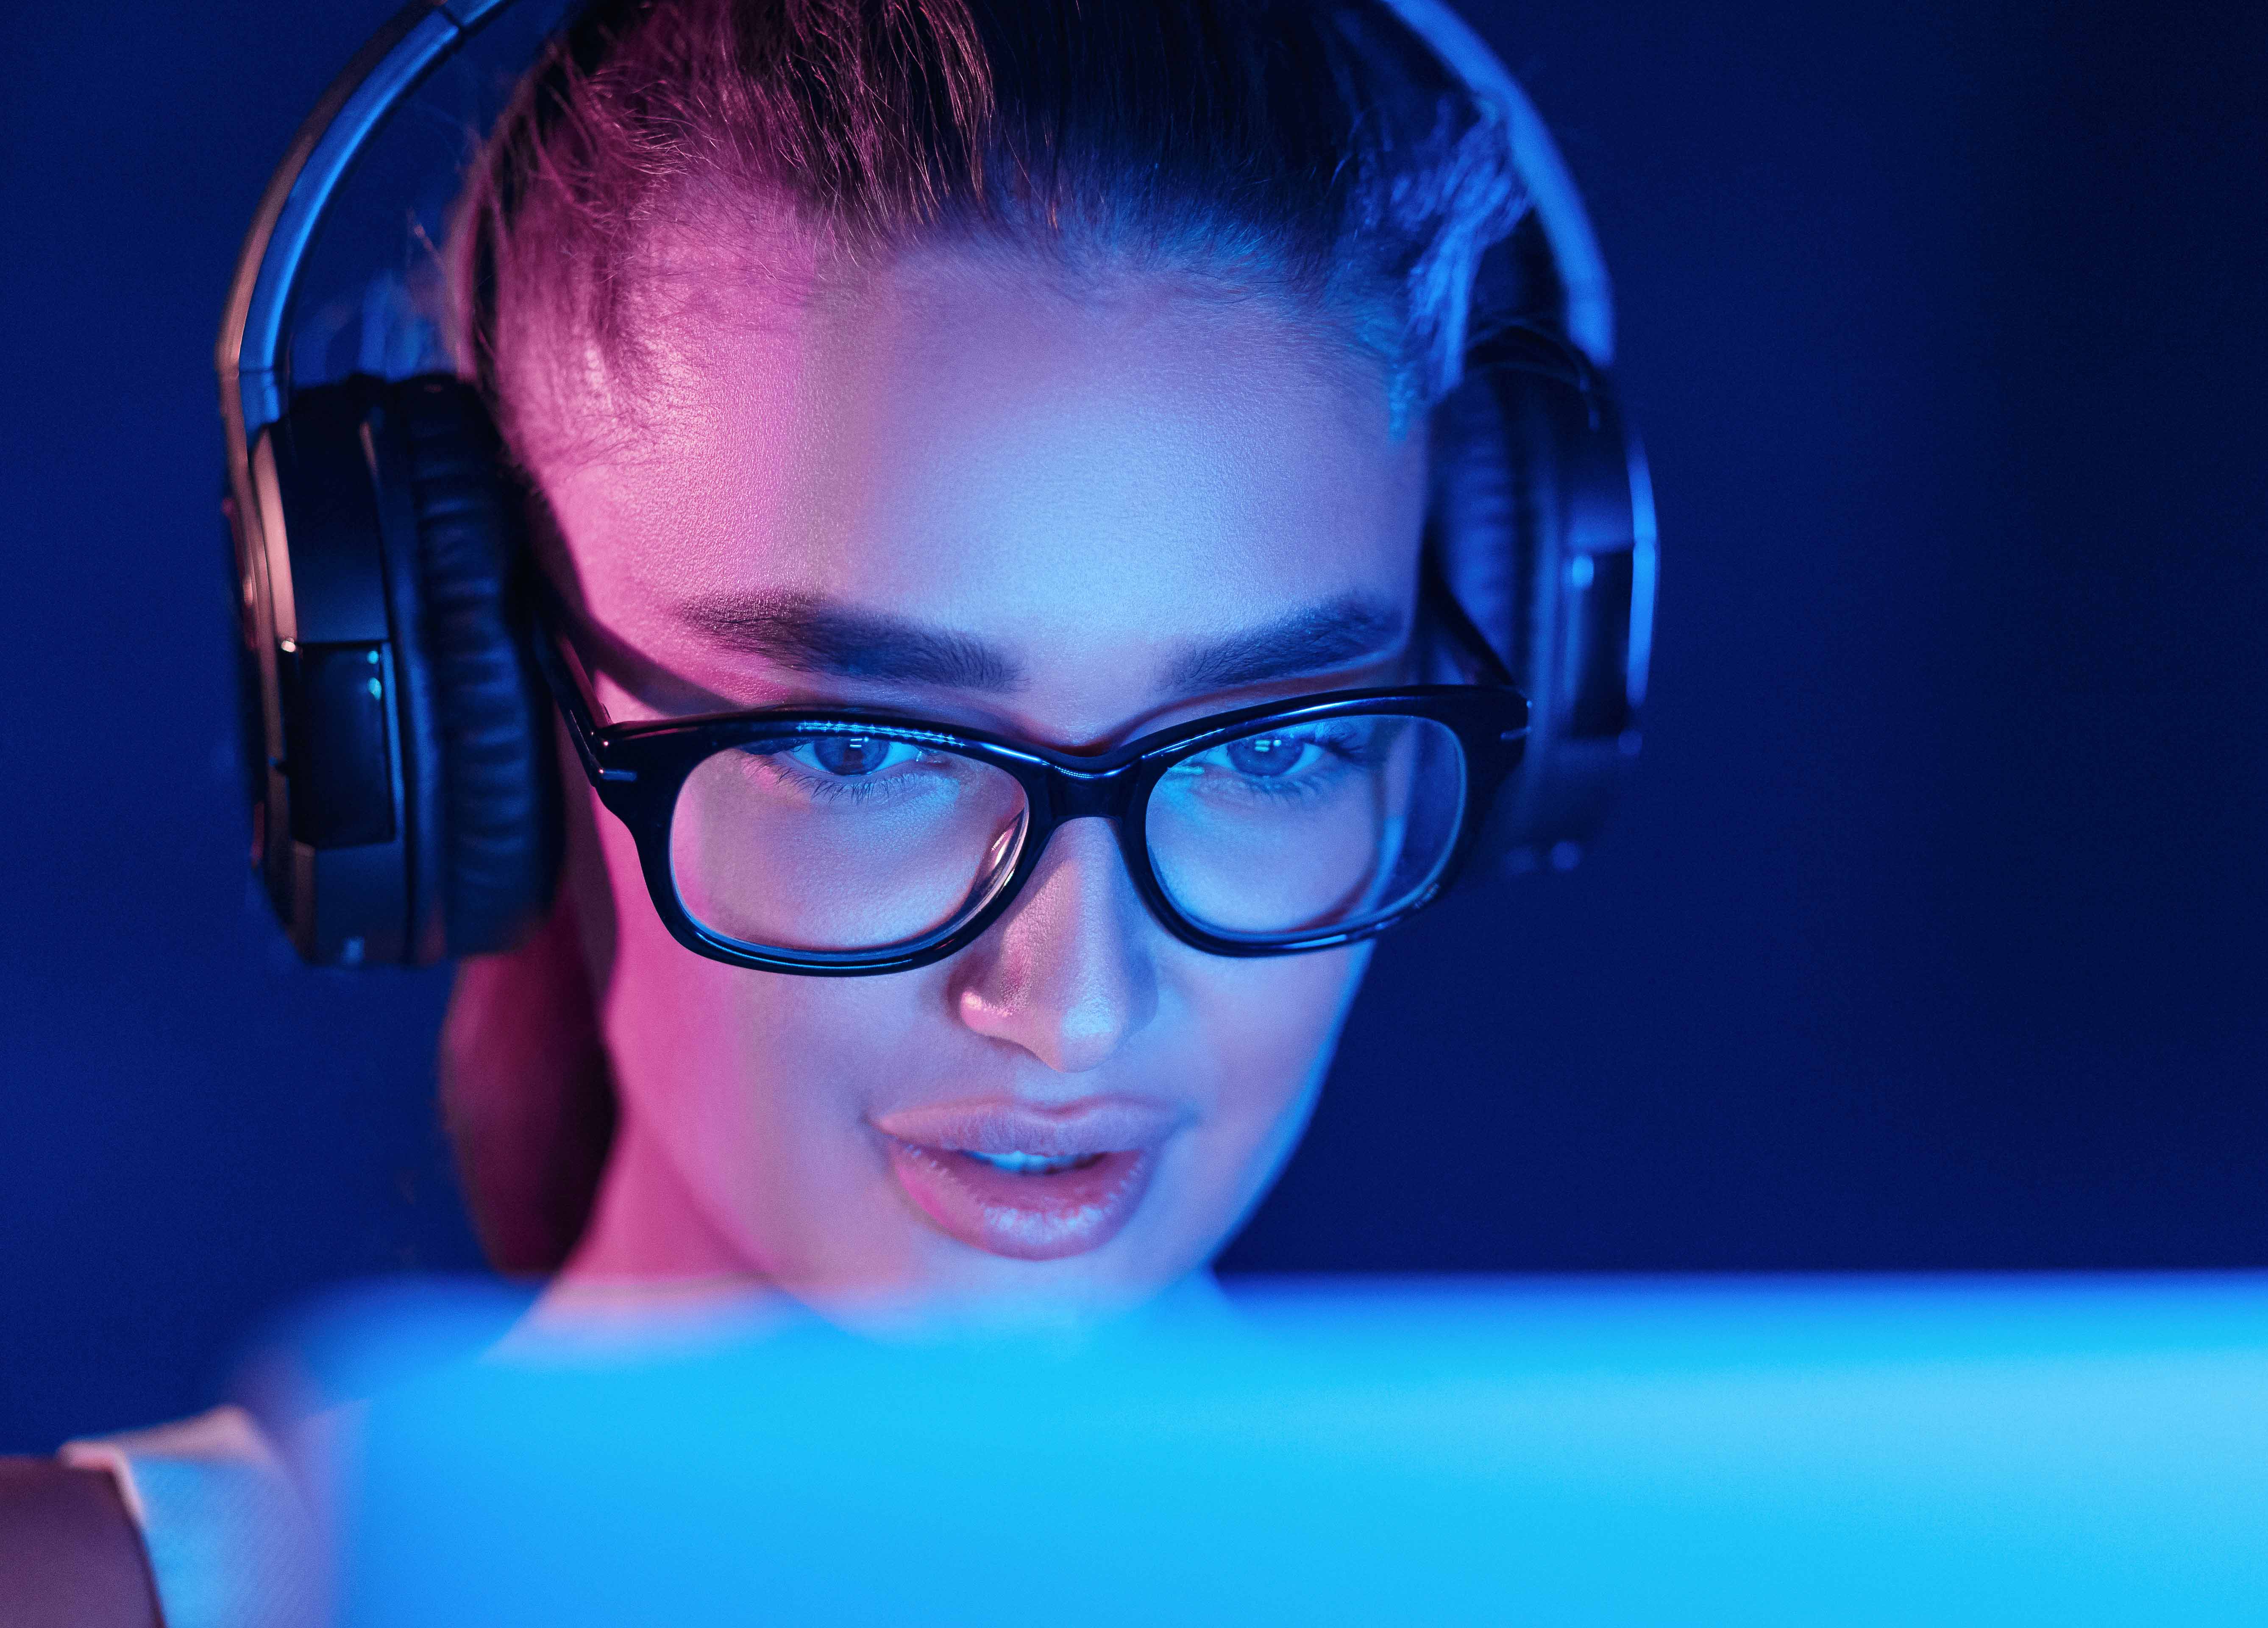 Female pro gamer playing video game, wearing headset